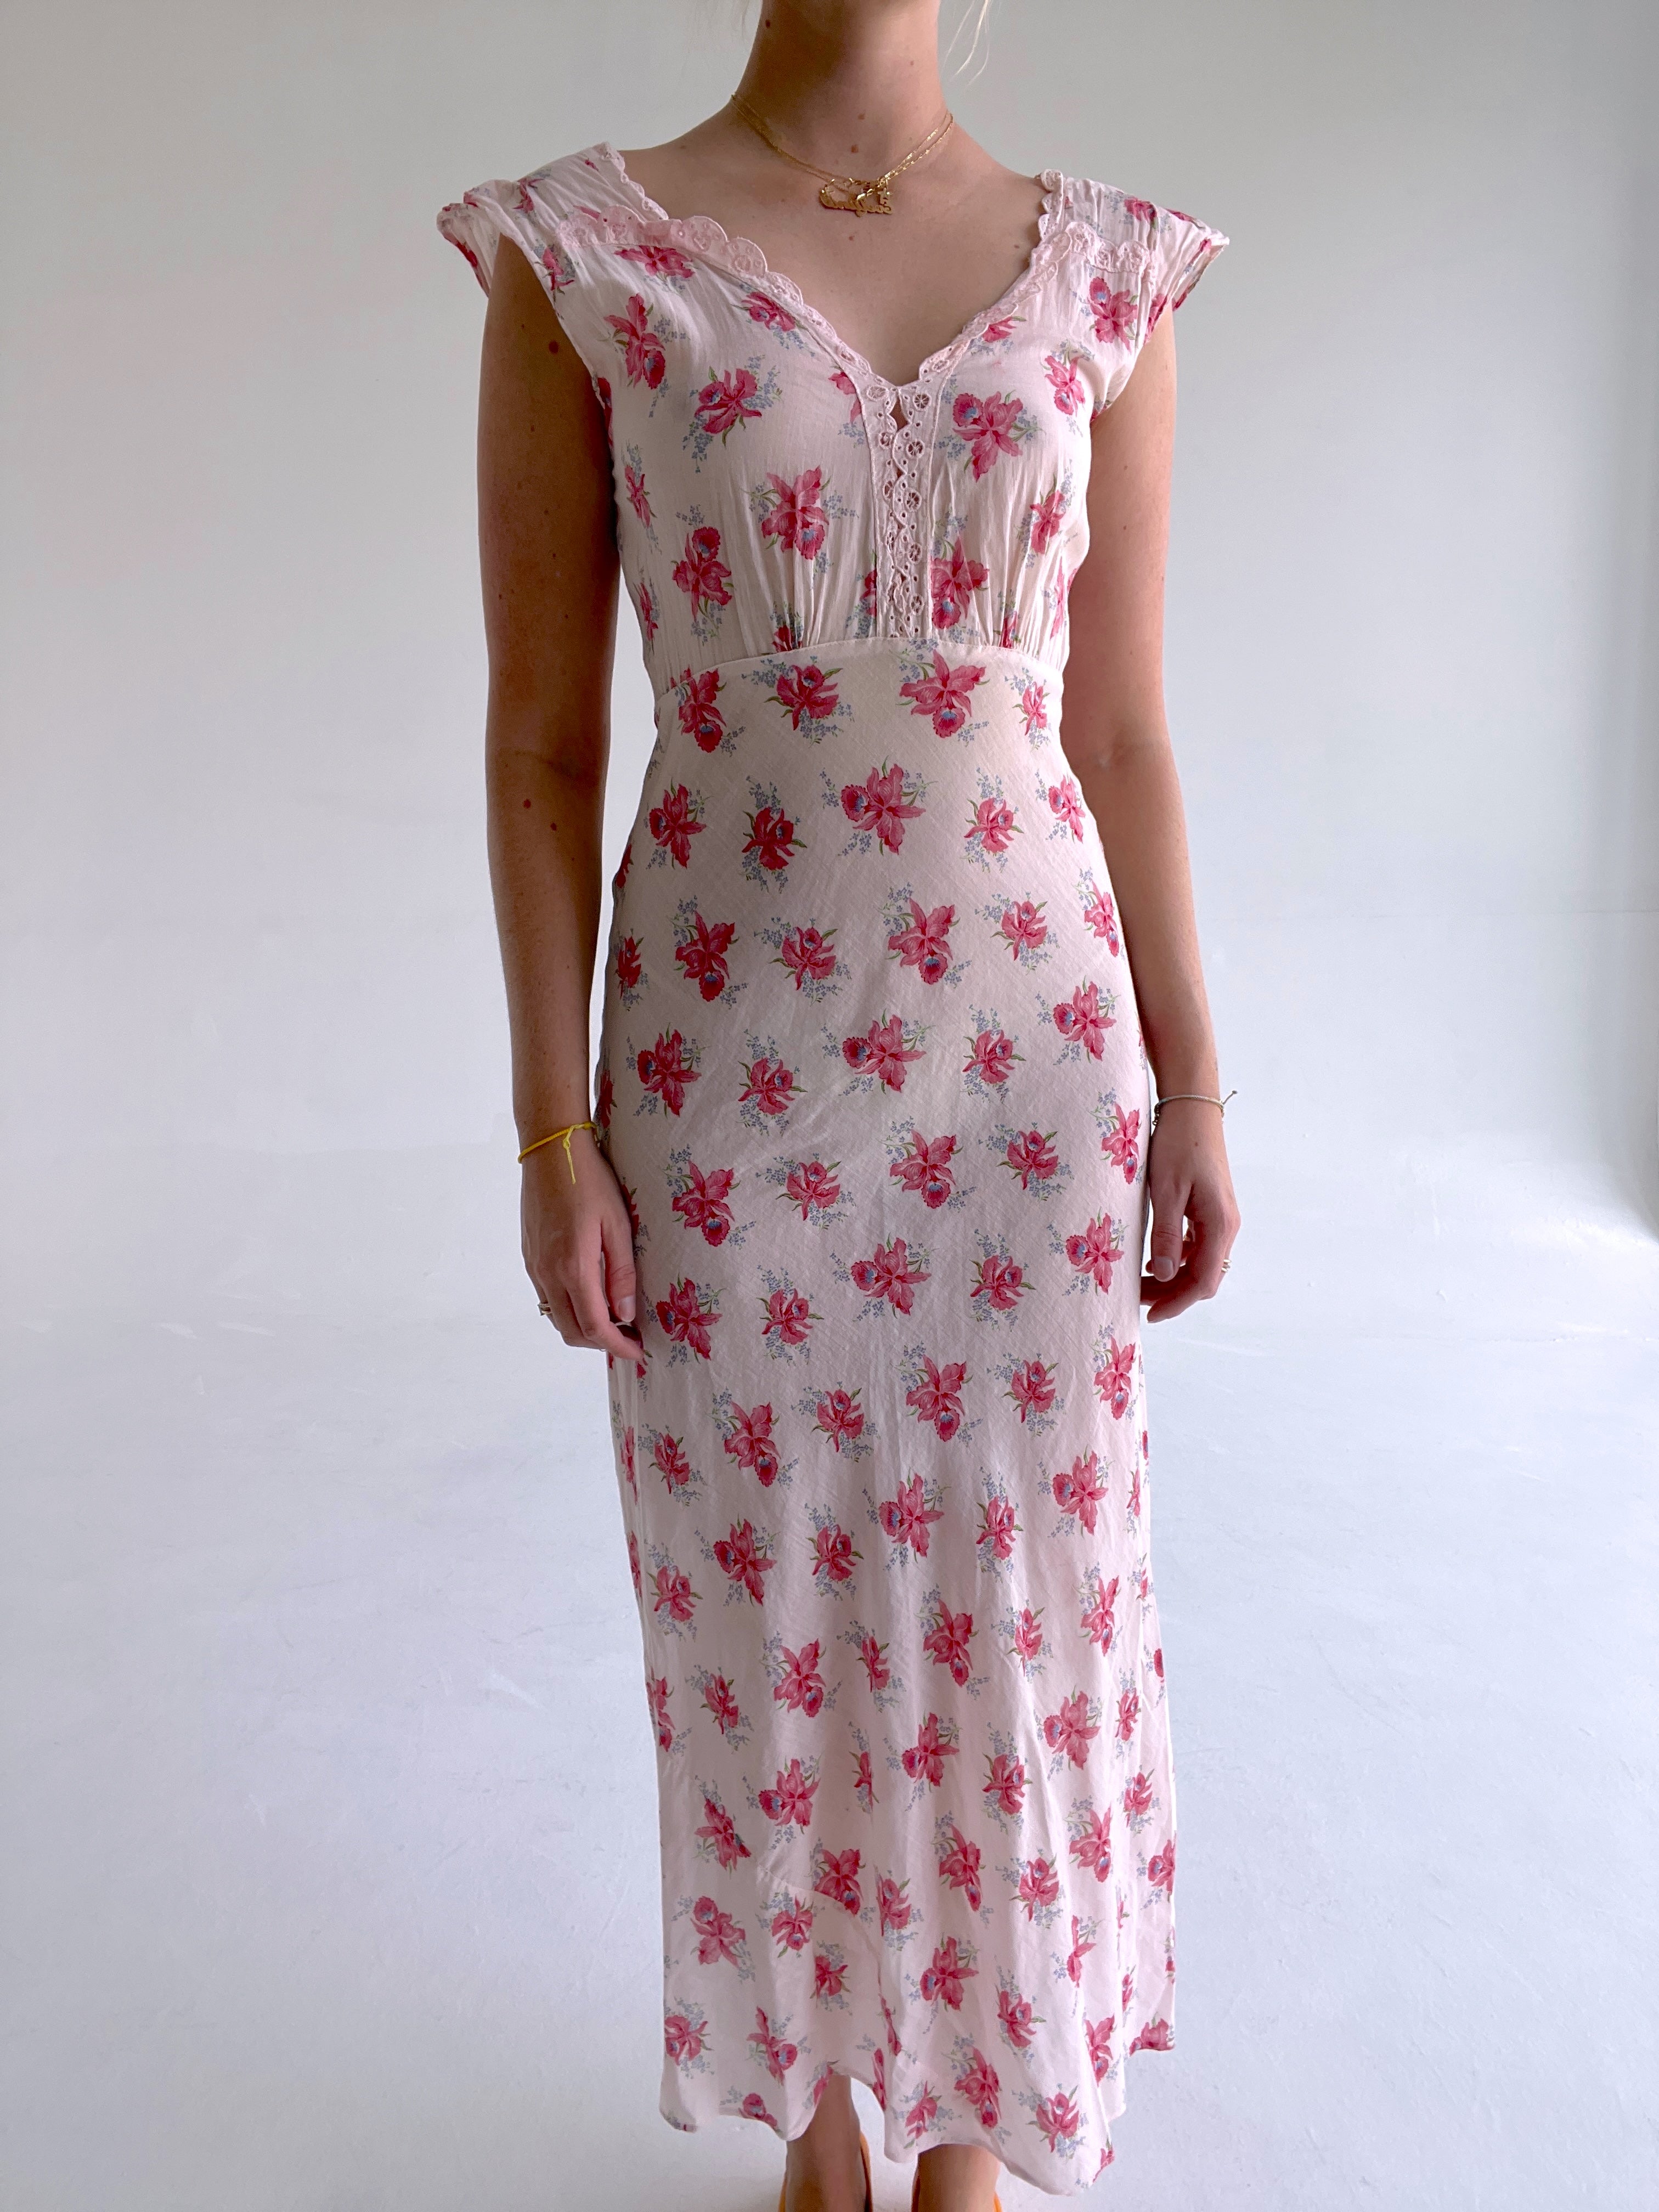 1930's Pink Floral Cotton Slip Dress